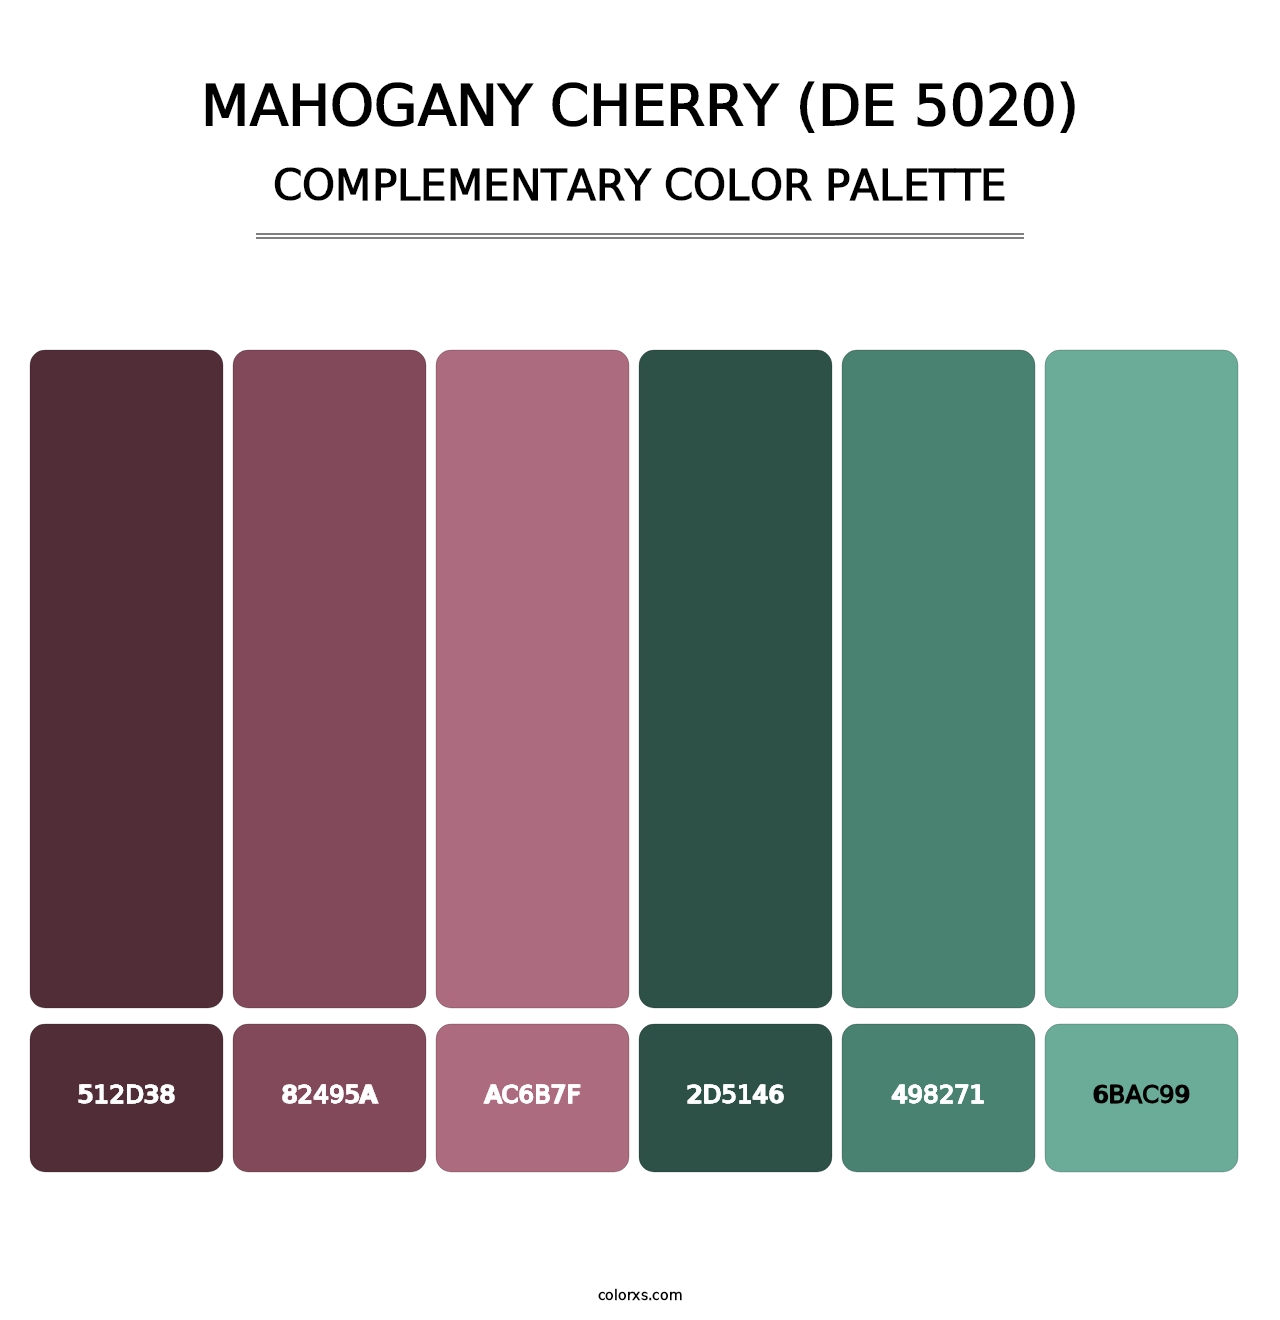 Mahogany Cherry (DE 5020) - Complementary Color Palette